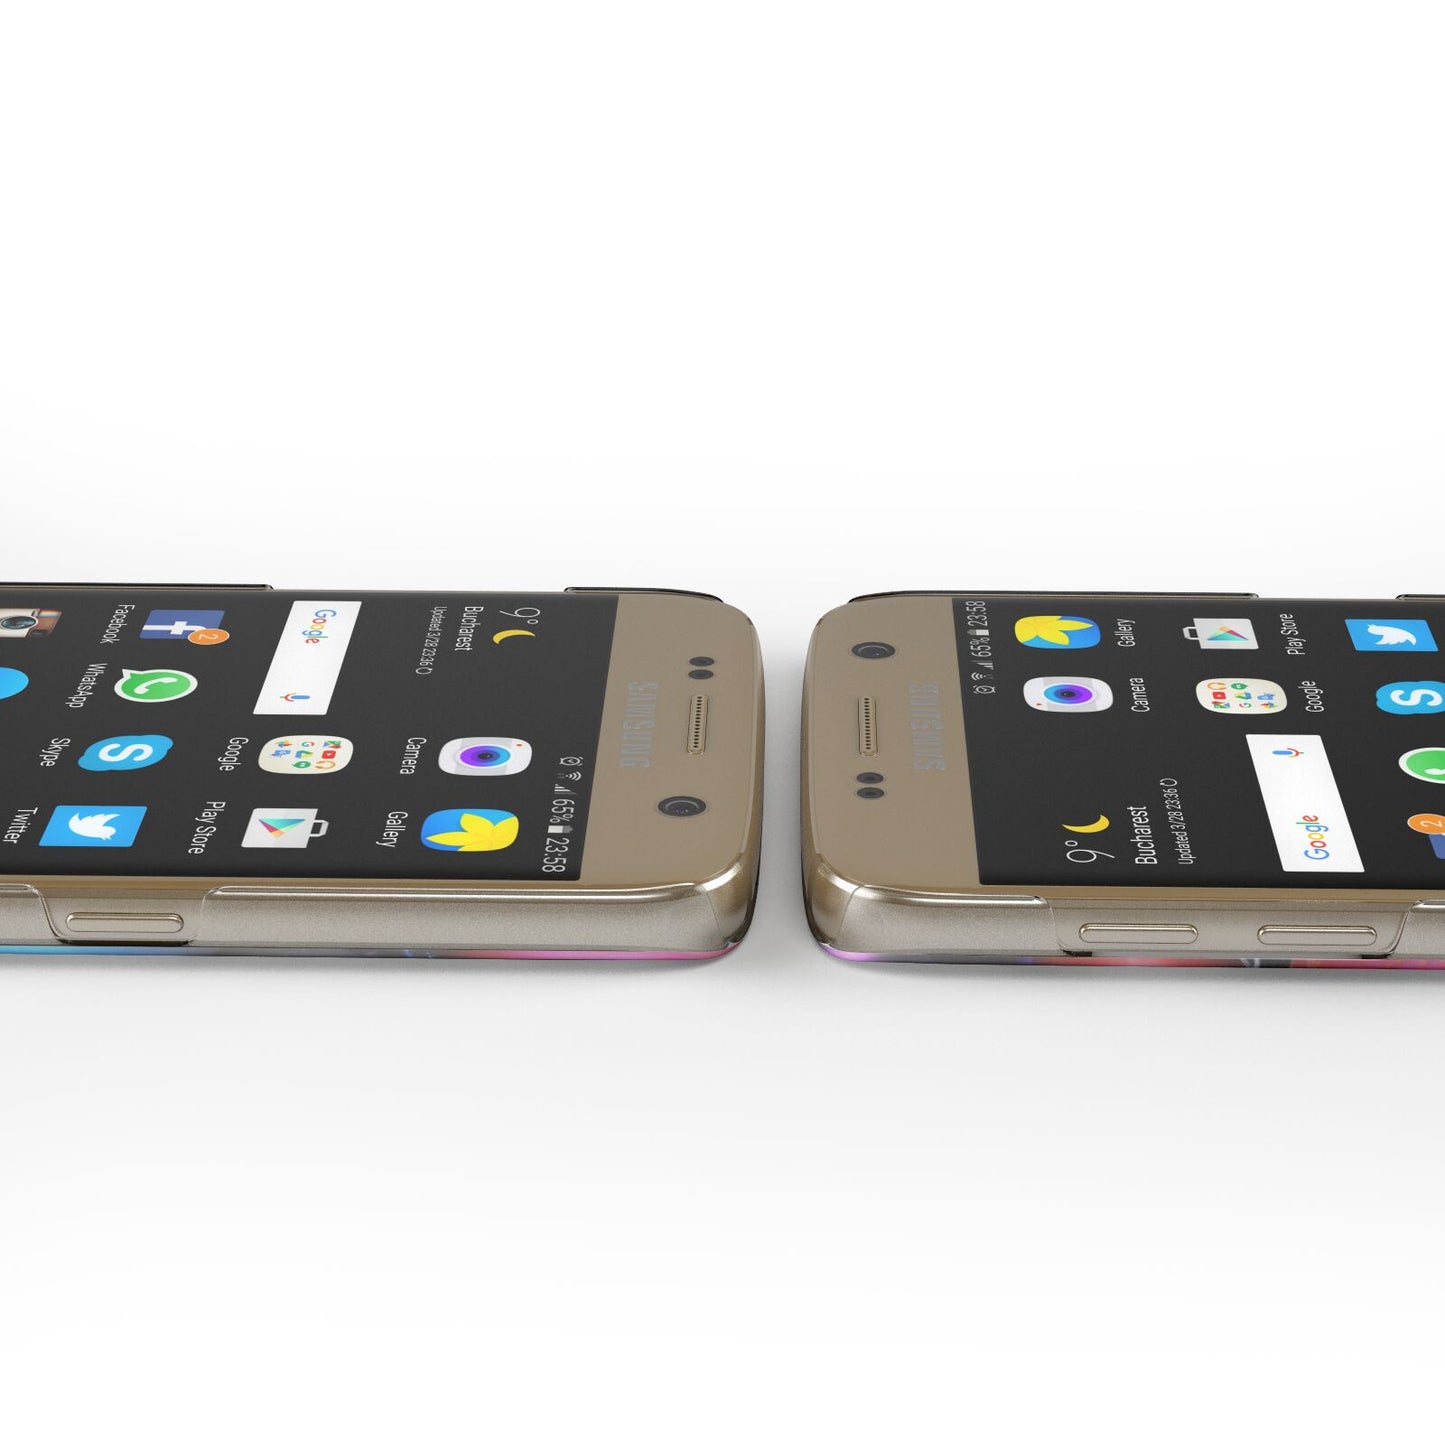 Bauble Samsung Galaxy Case Ports Cutout